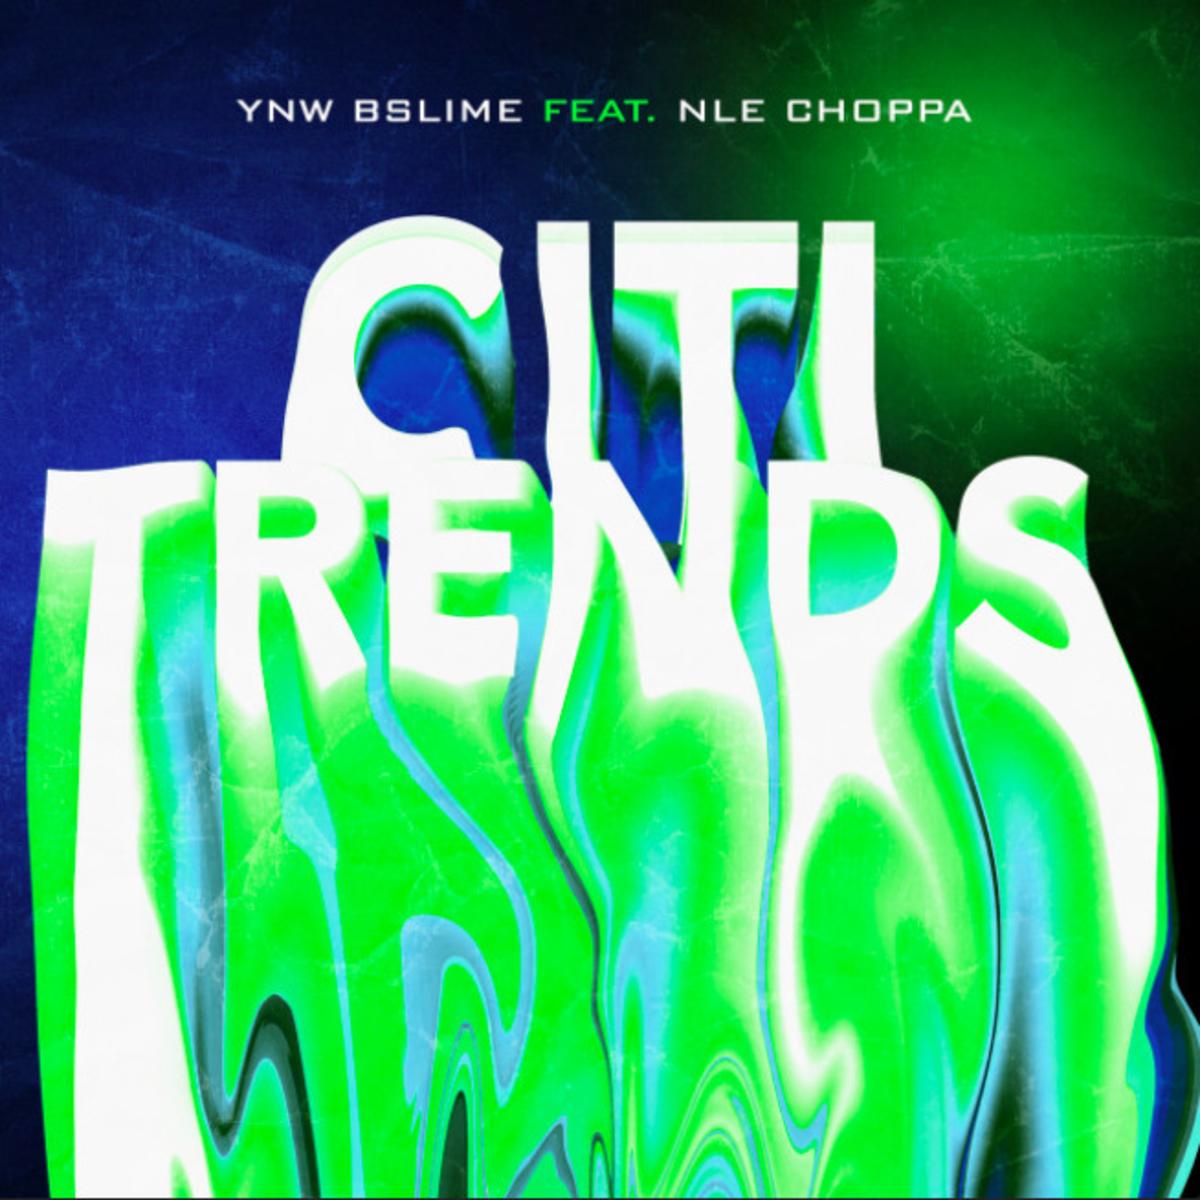 YNW BSlime – Citi Trends Ft. NLE Choppa